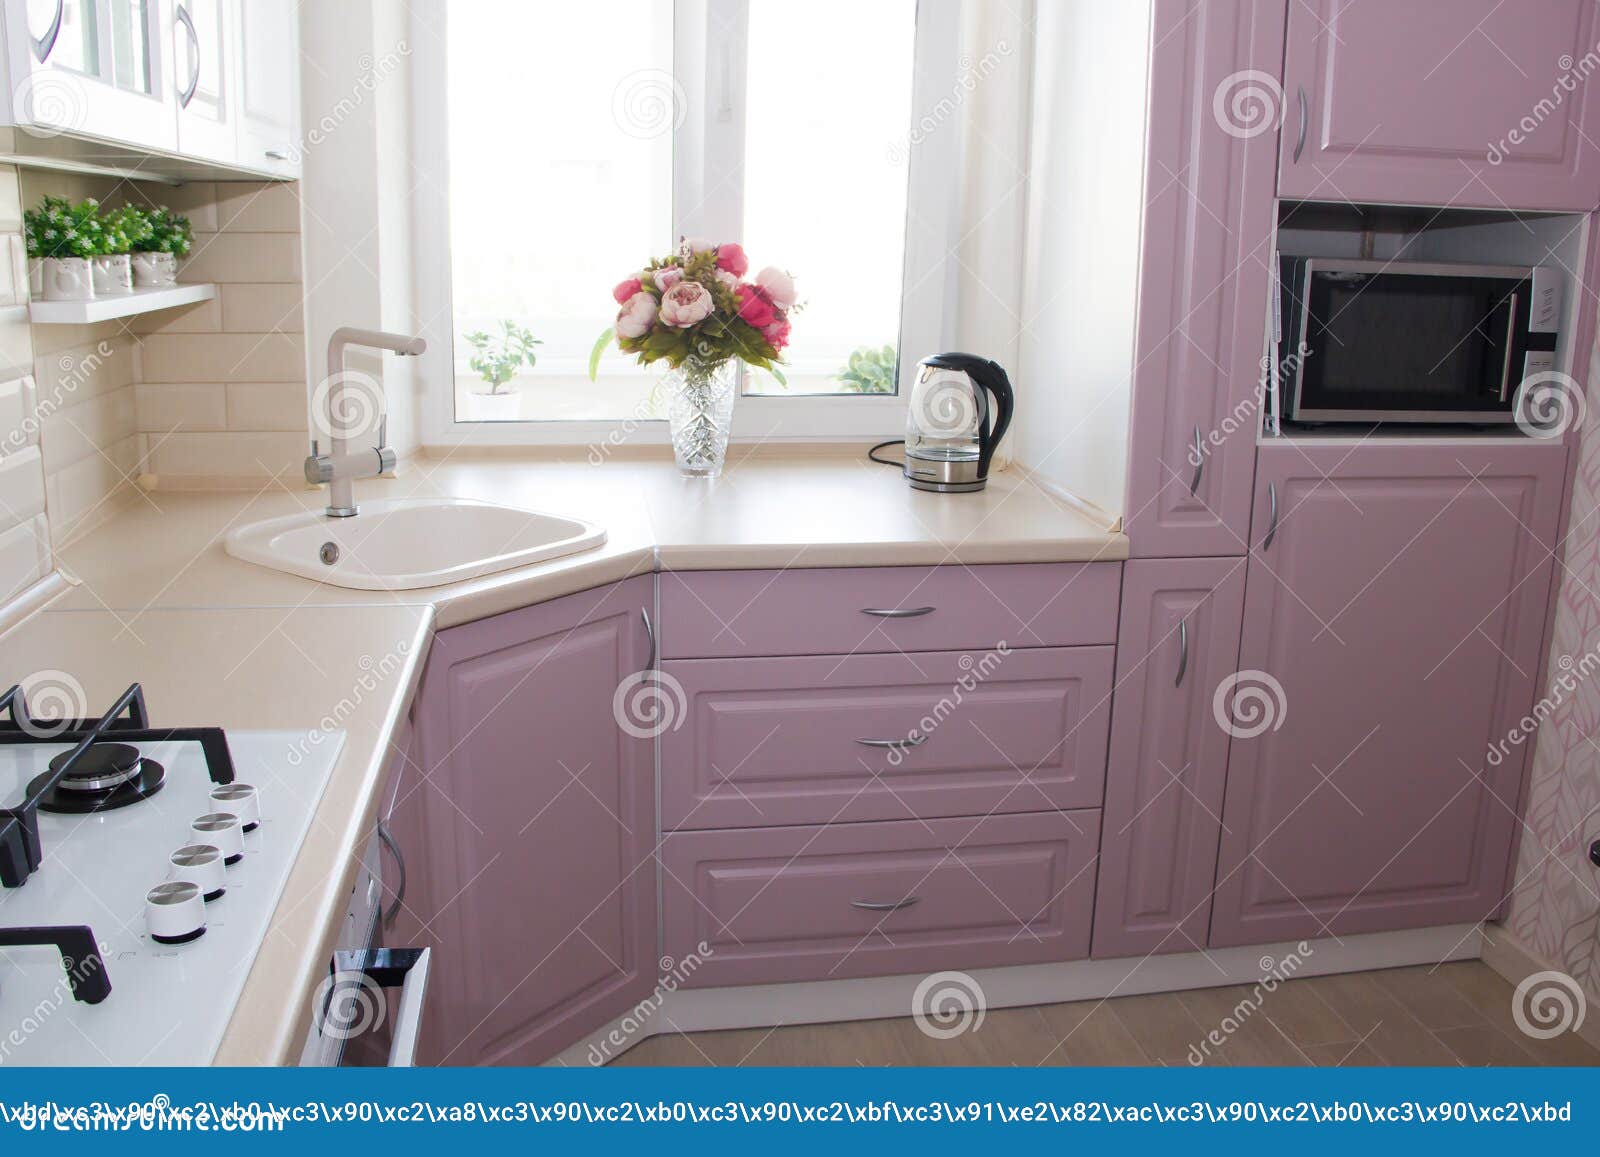 Large Light Pink Kitchen Interior Wooden Design Russia St Petersburg June 124819987 